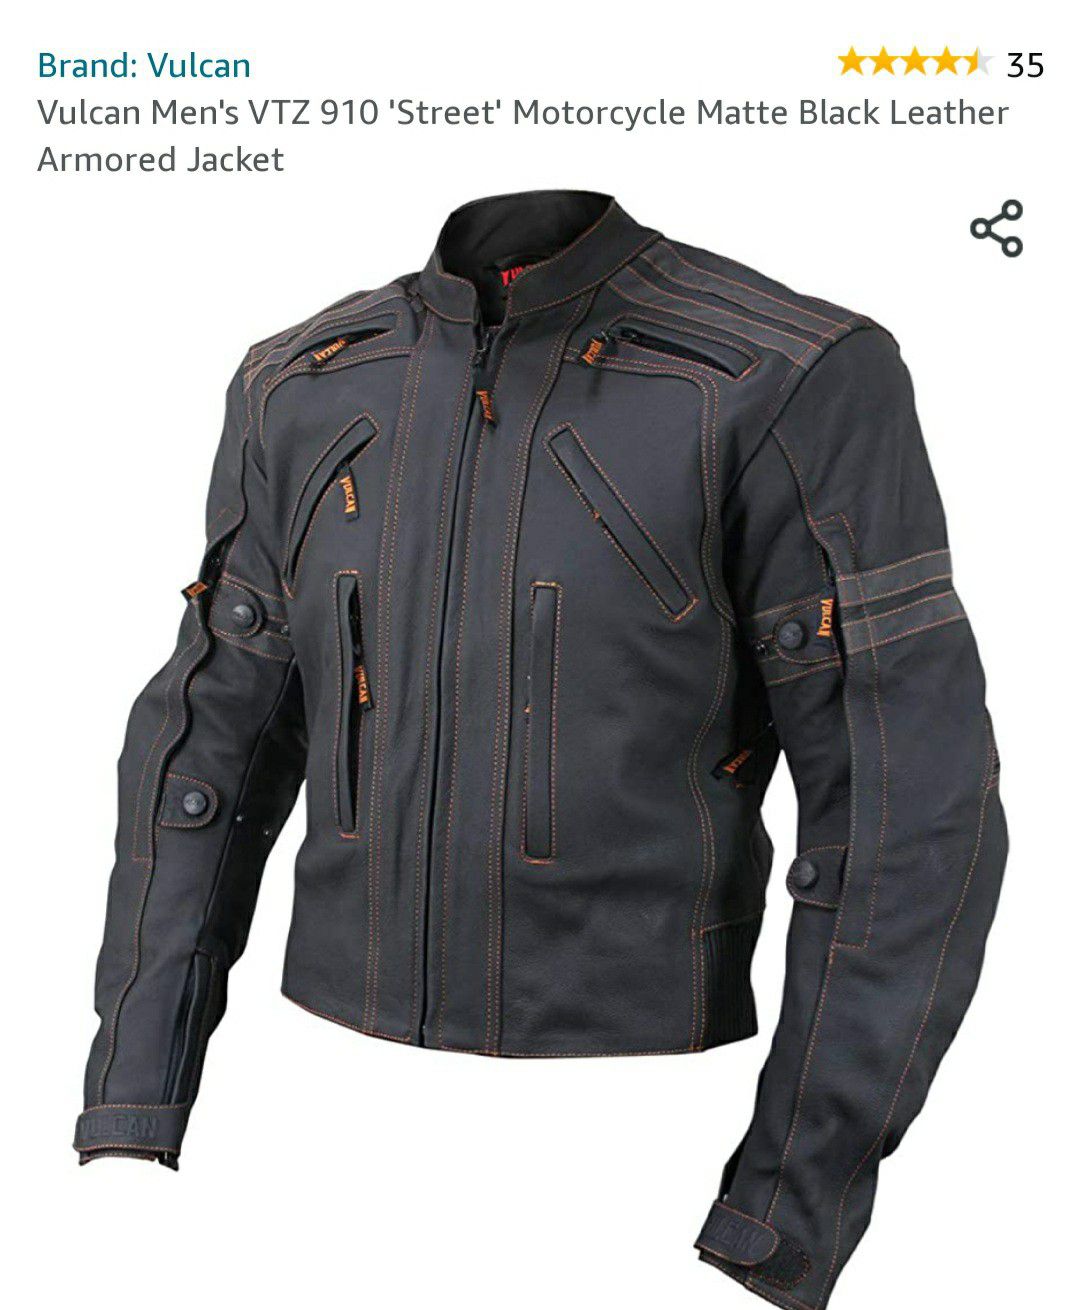 XXL Vulcan Men's VTZ 910 Motorcycle Matte black leather armored jacket , NEW